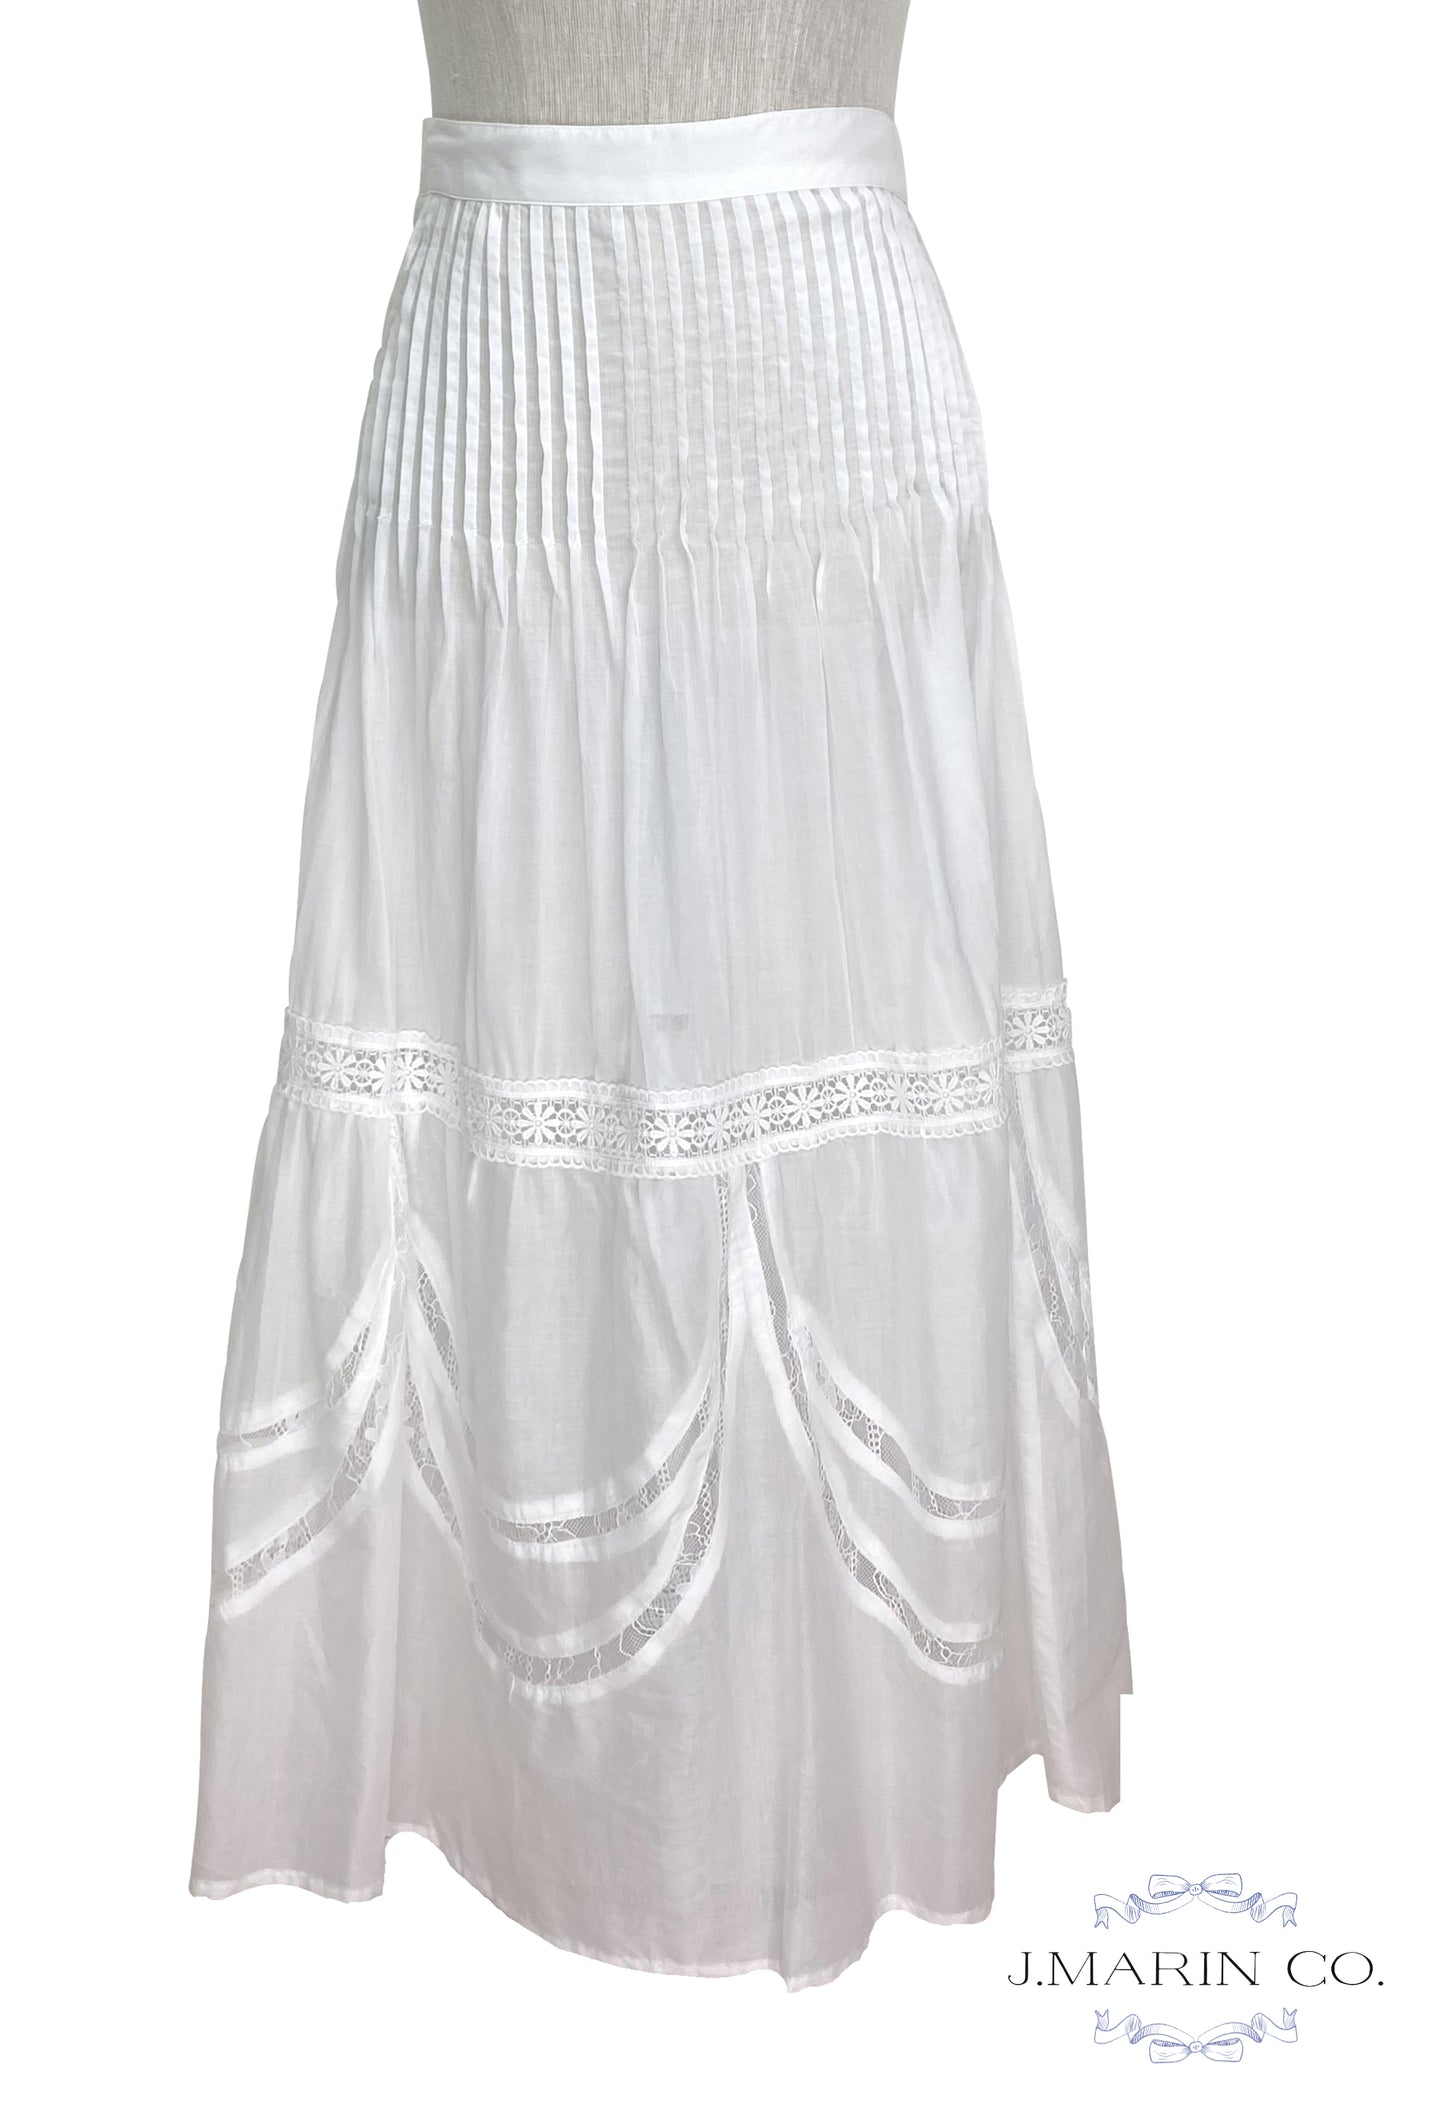 The Tabitha Victorian Skirt - White Lace - J. Marin